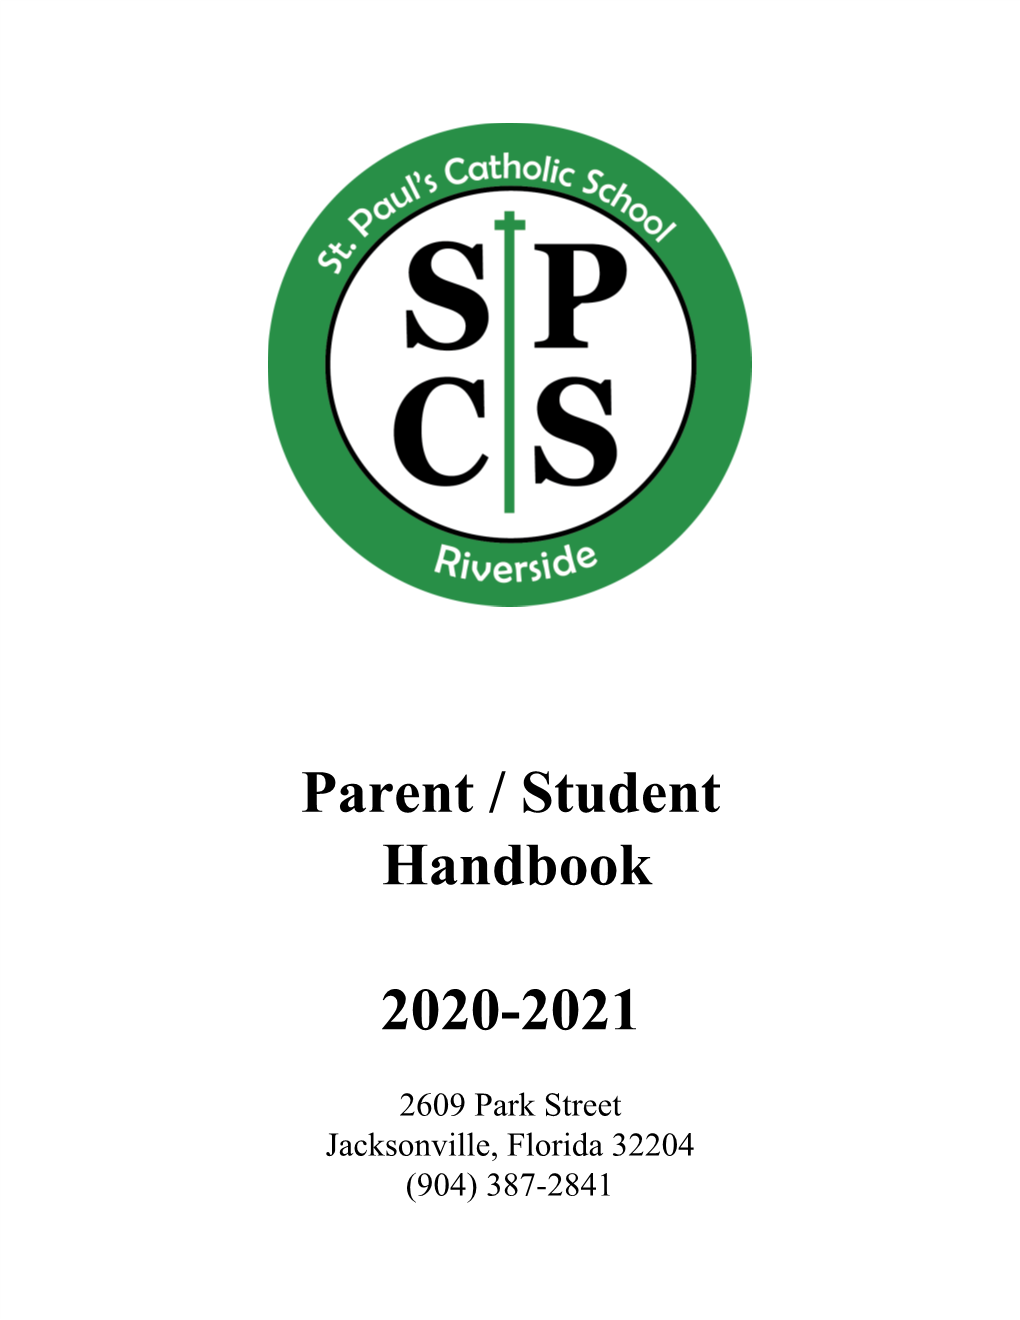 Parent / Student Handbook 2020-2021